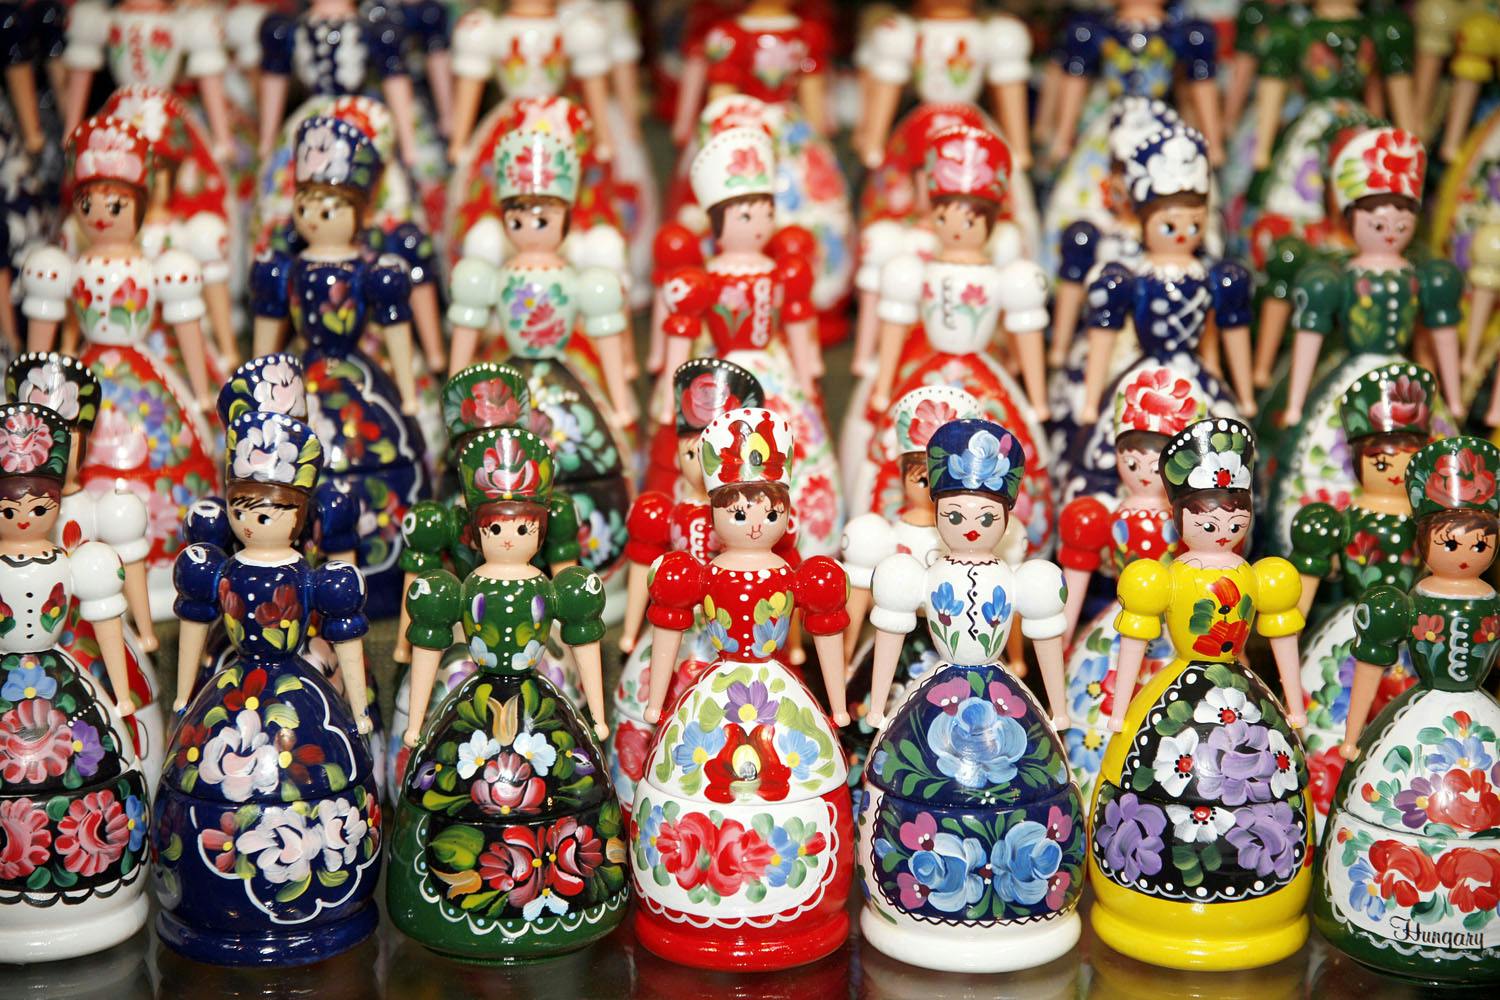 wooden dolls - a traditional souvenir